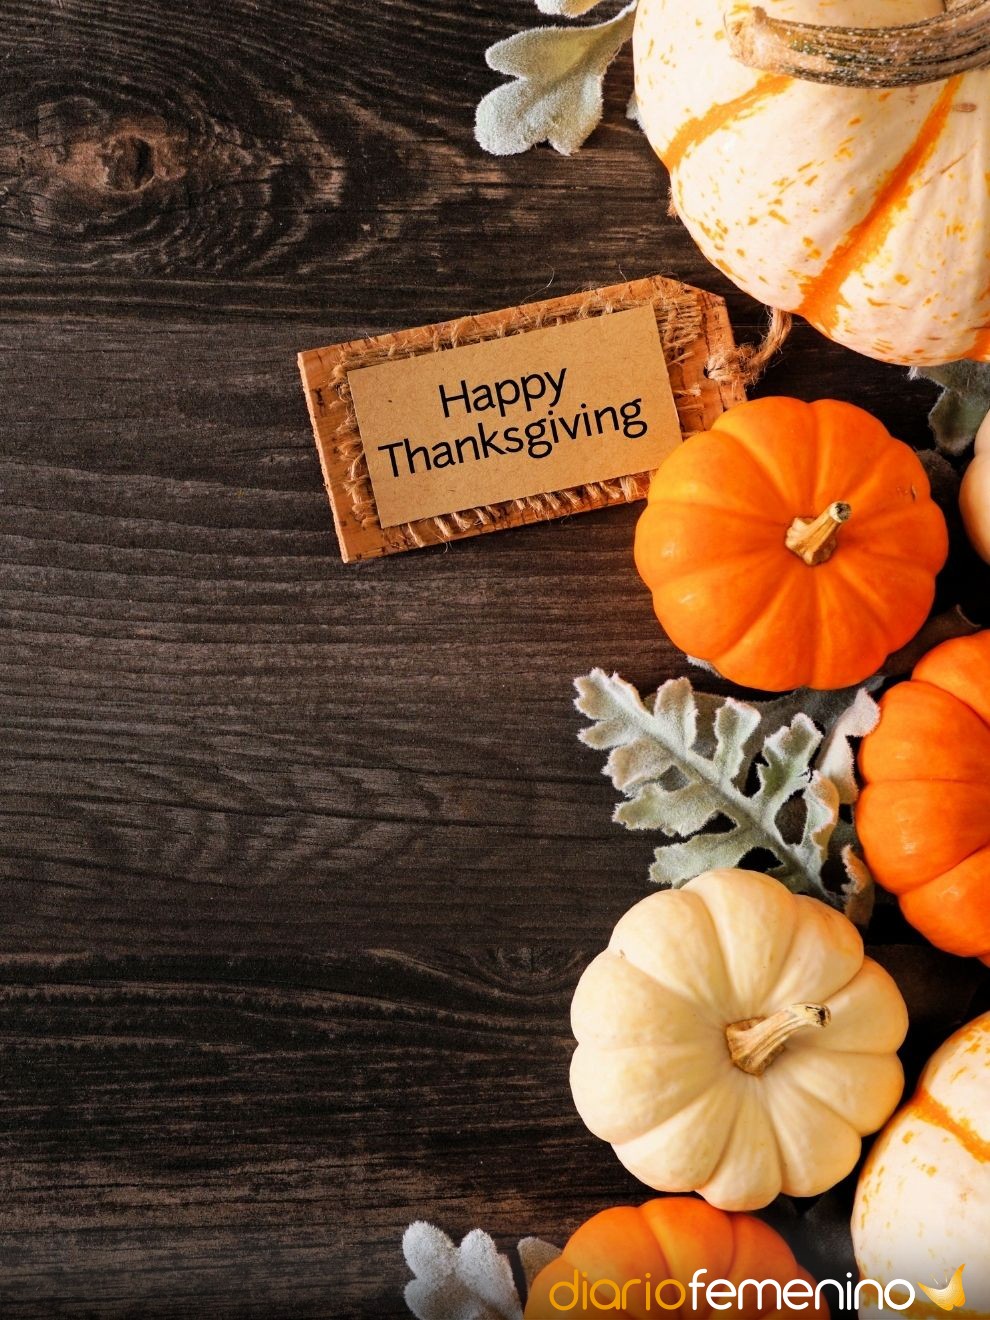 Feliz Día de Acción de Gracias: frases de gratitud para Thanksgiving